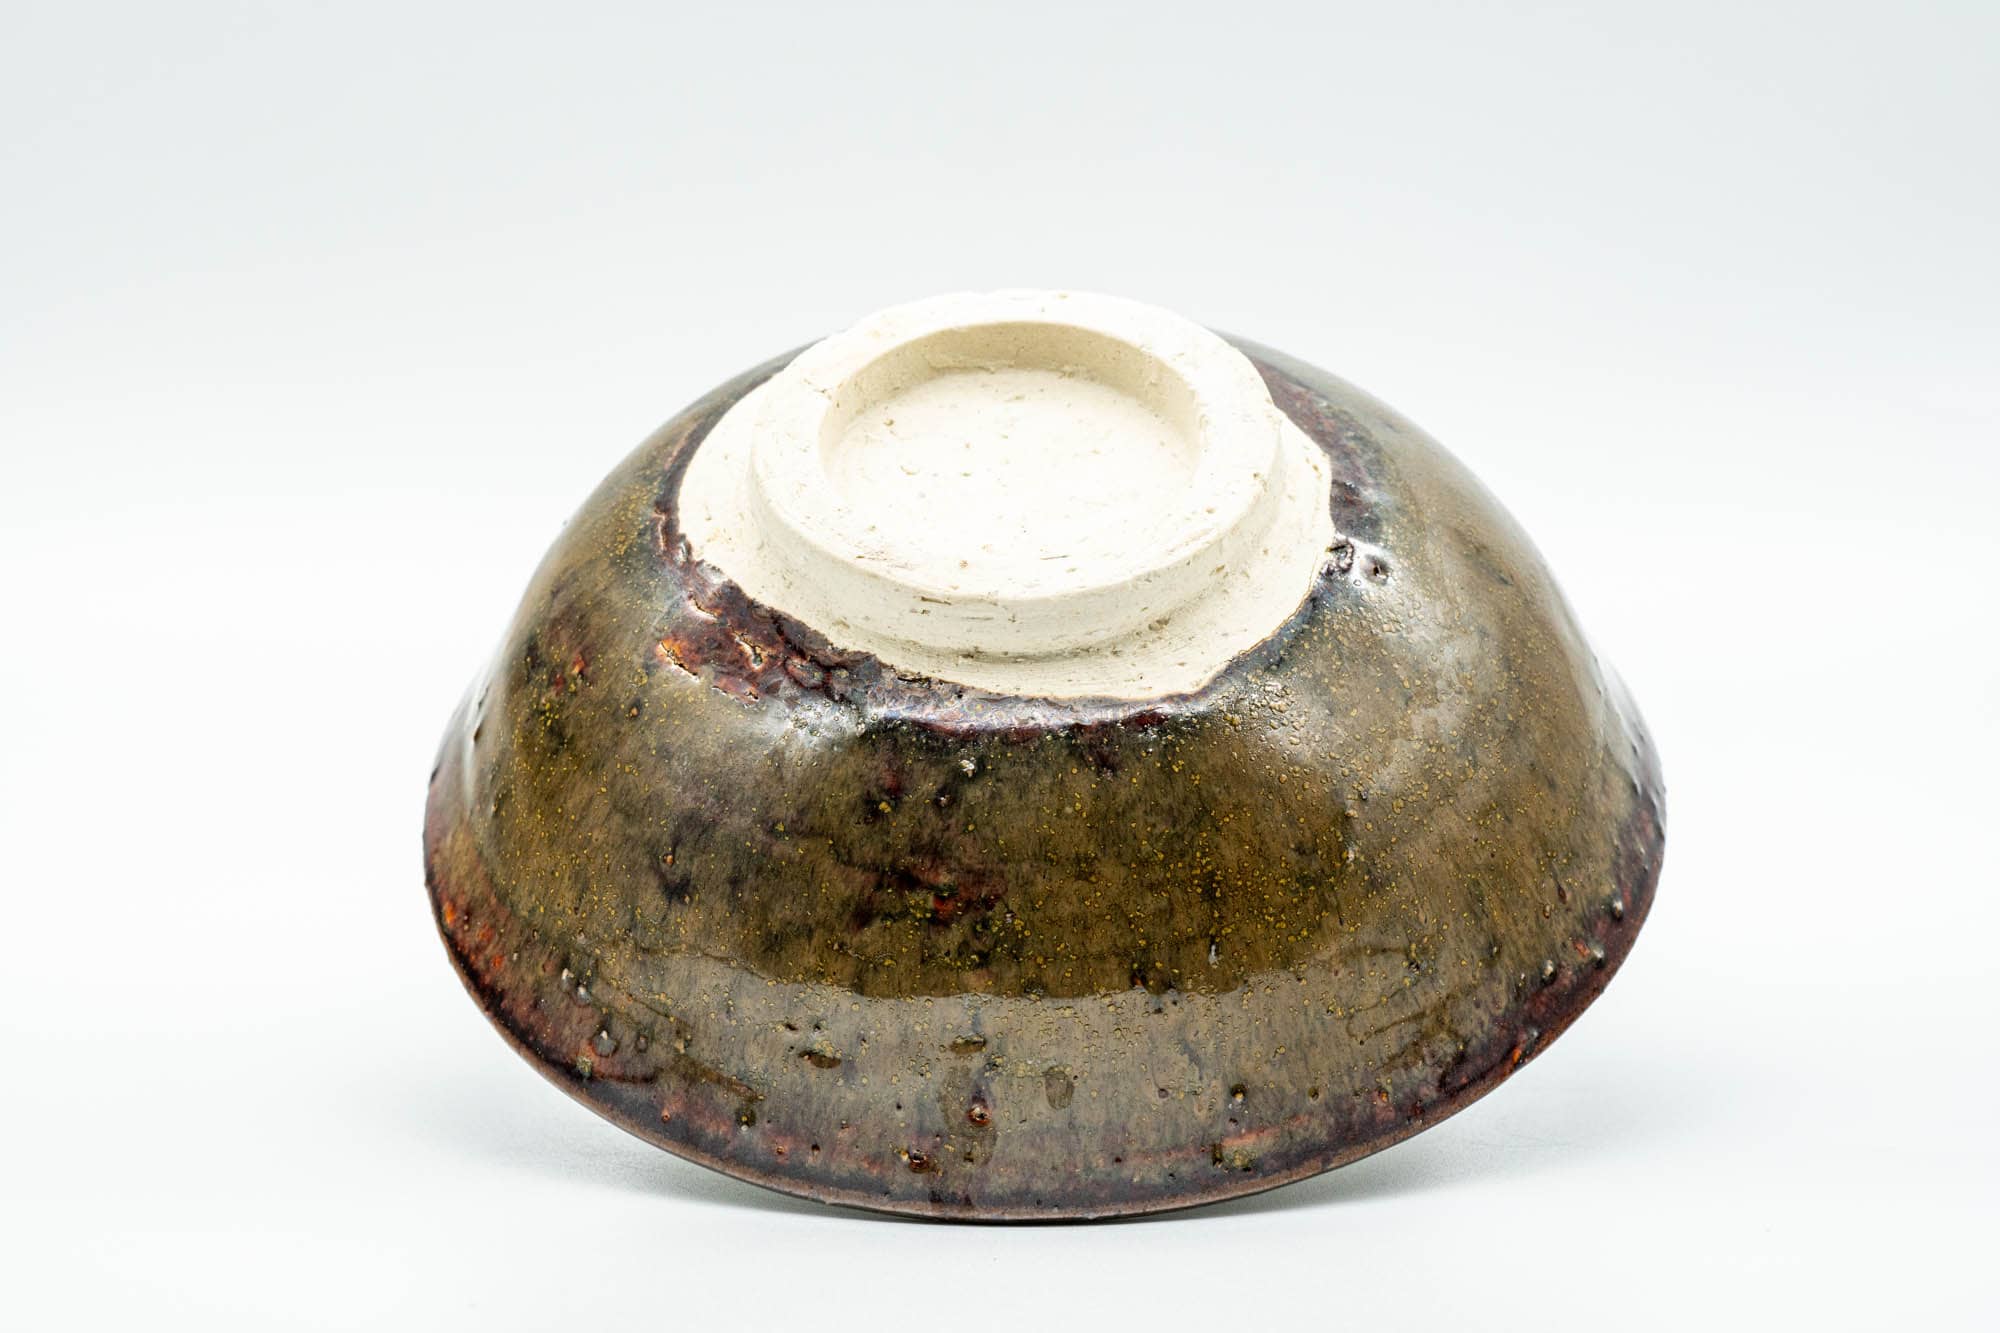 Japanese Matcha Bowl - Small Brown Glazed Textured Chawan - 150ml